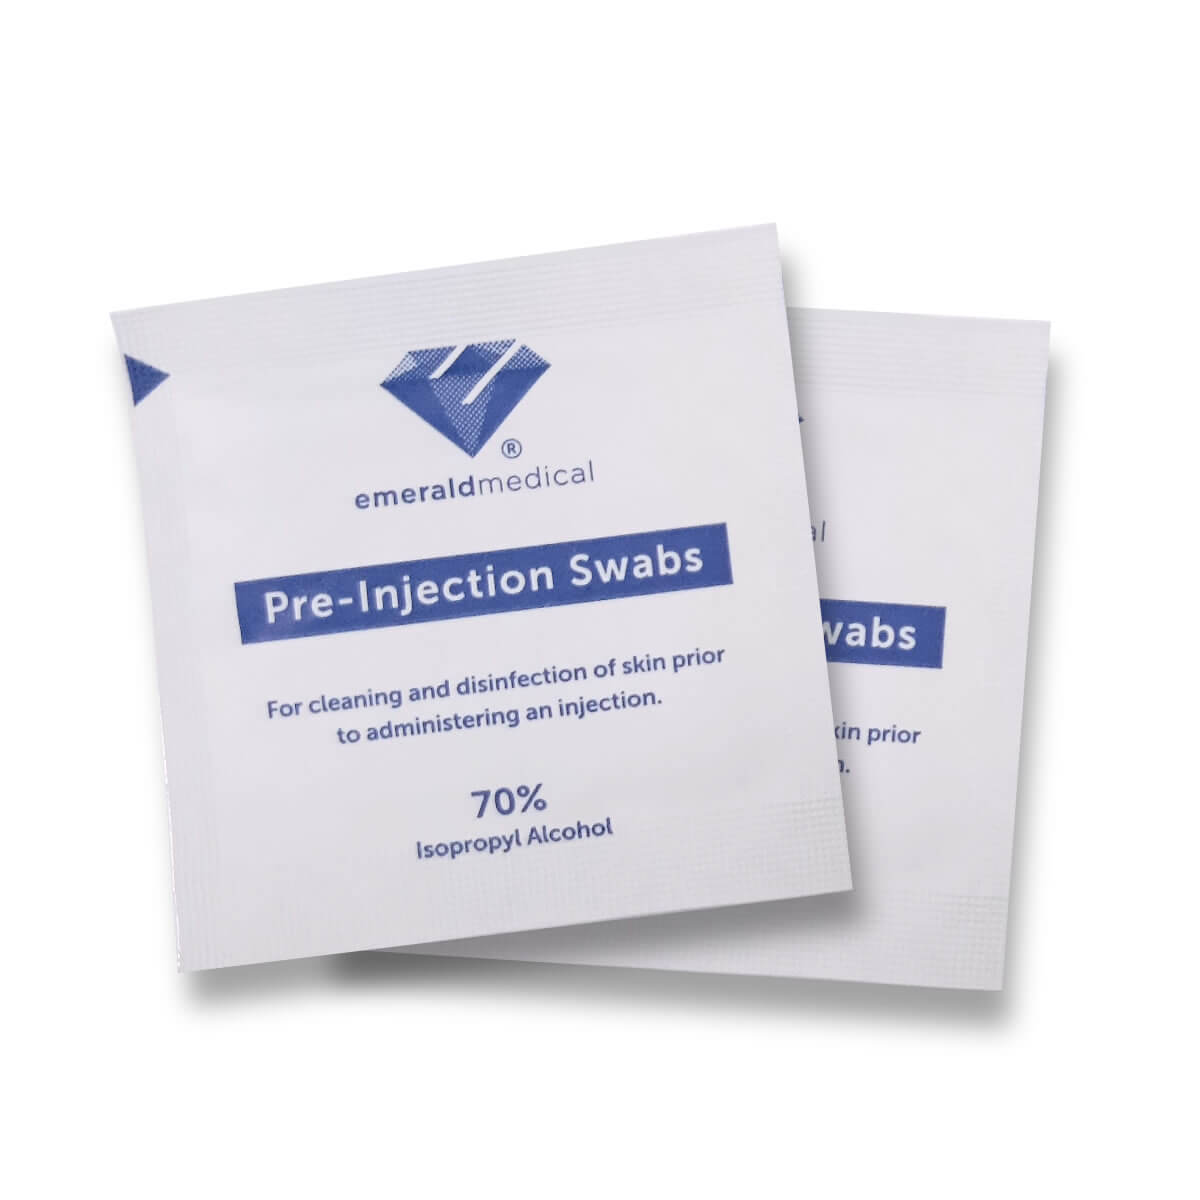 Pre-Injection Swabs. Single sachet.